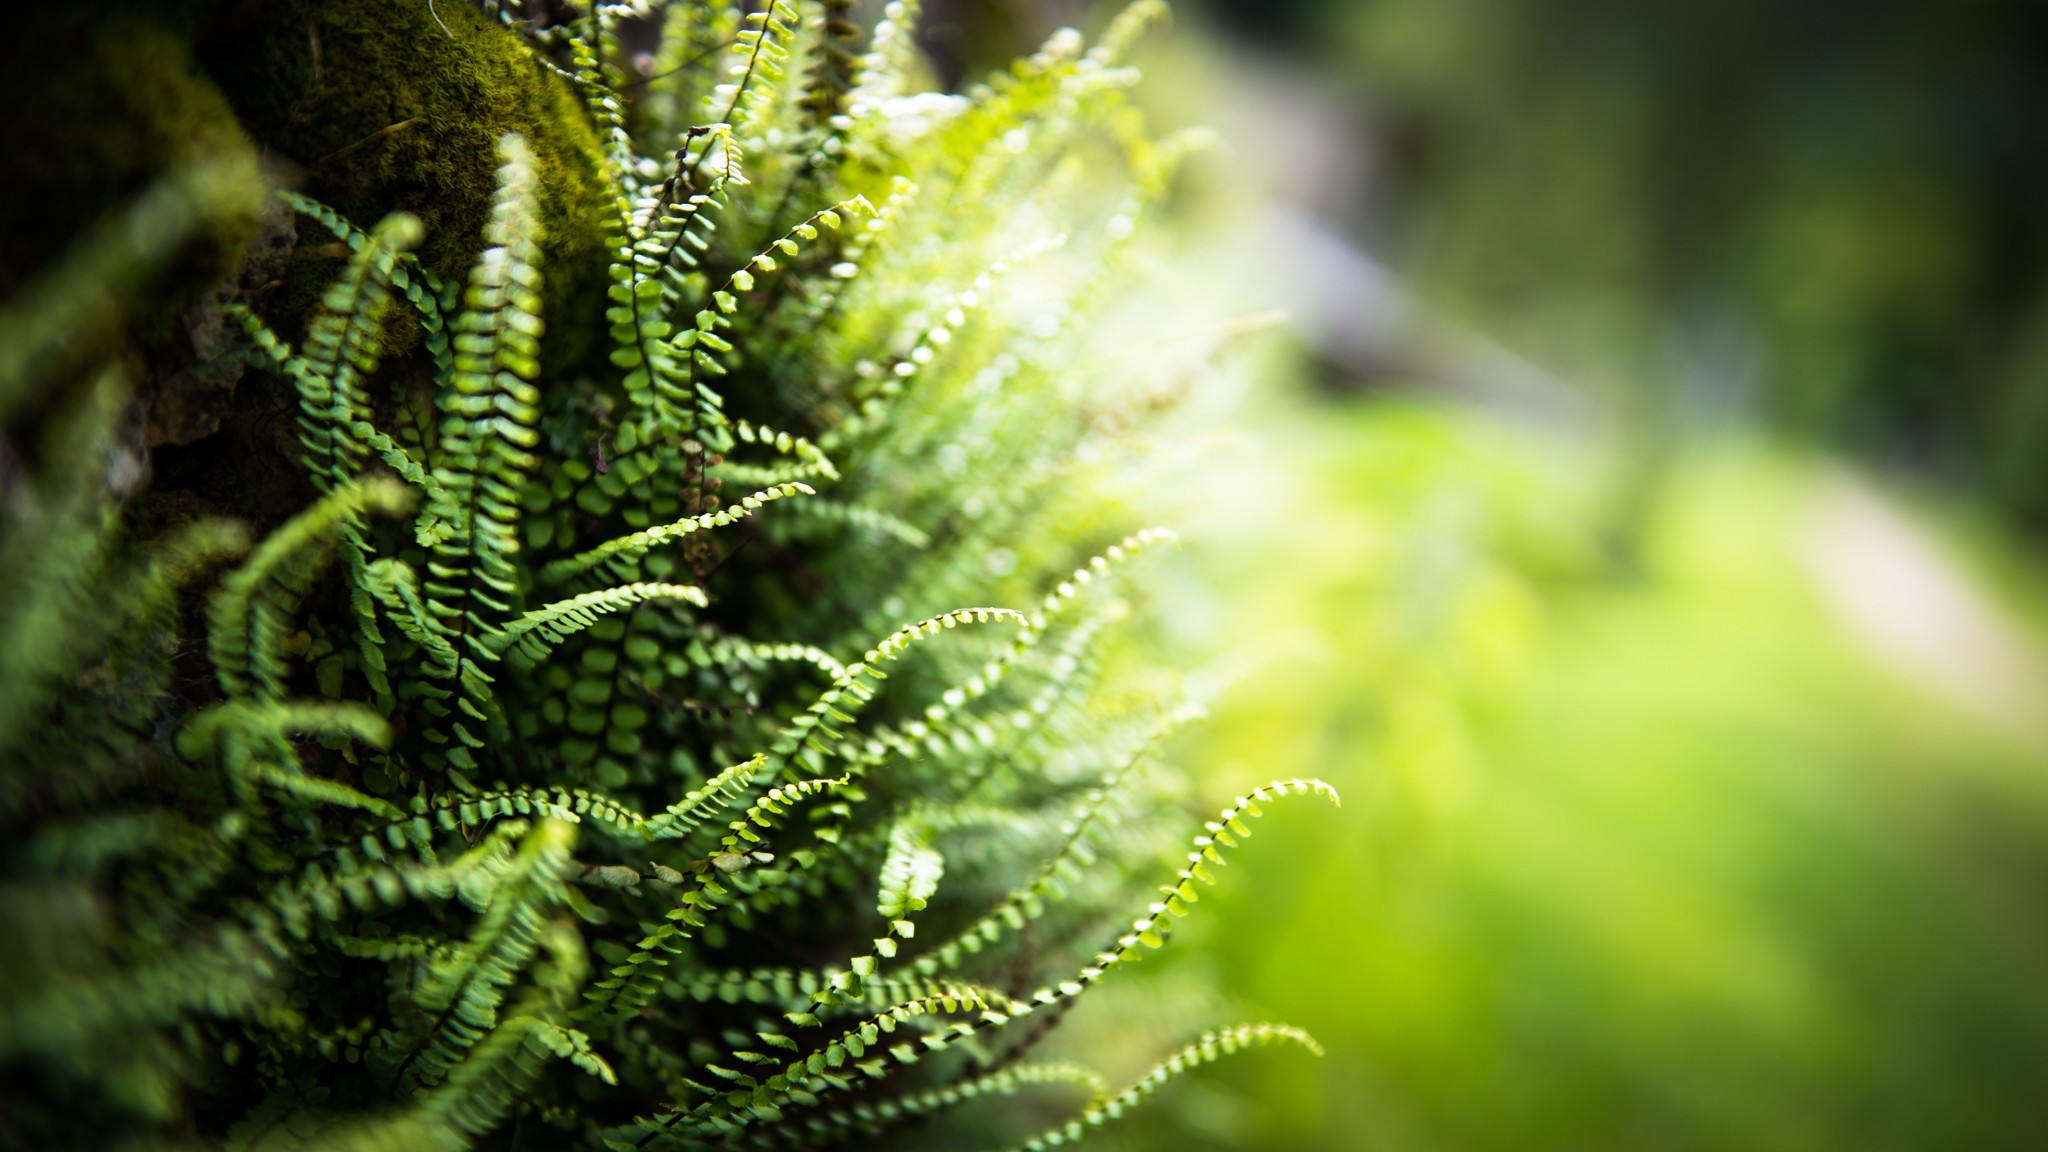 General 2048x1152 nature ferns blurred depth of field plants macro